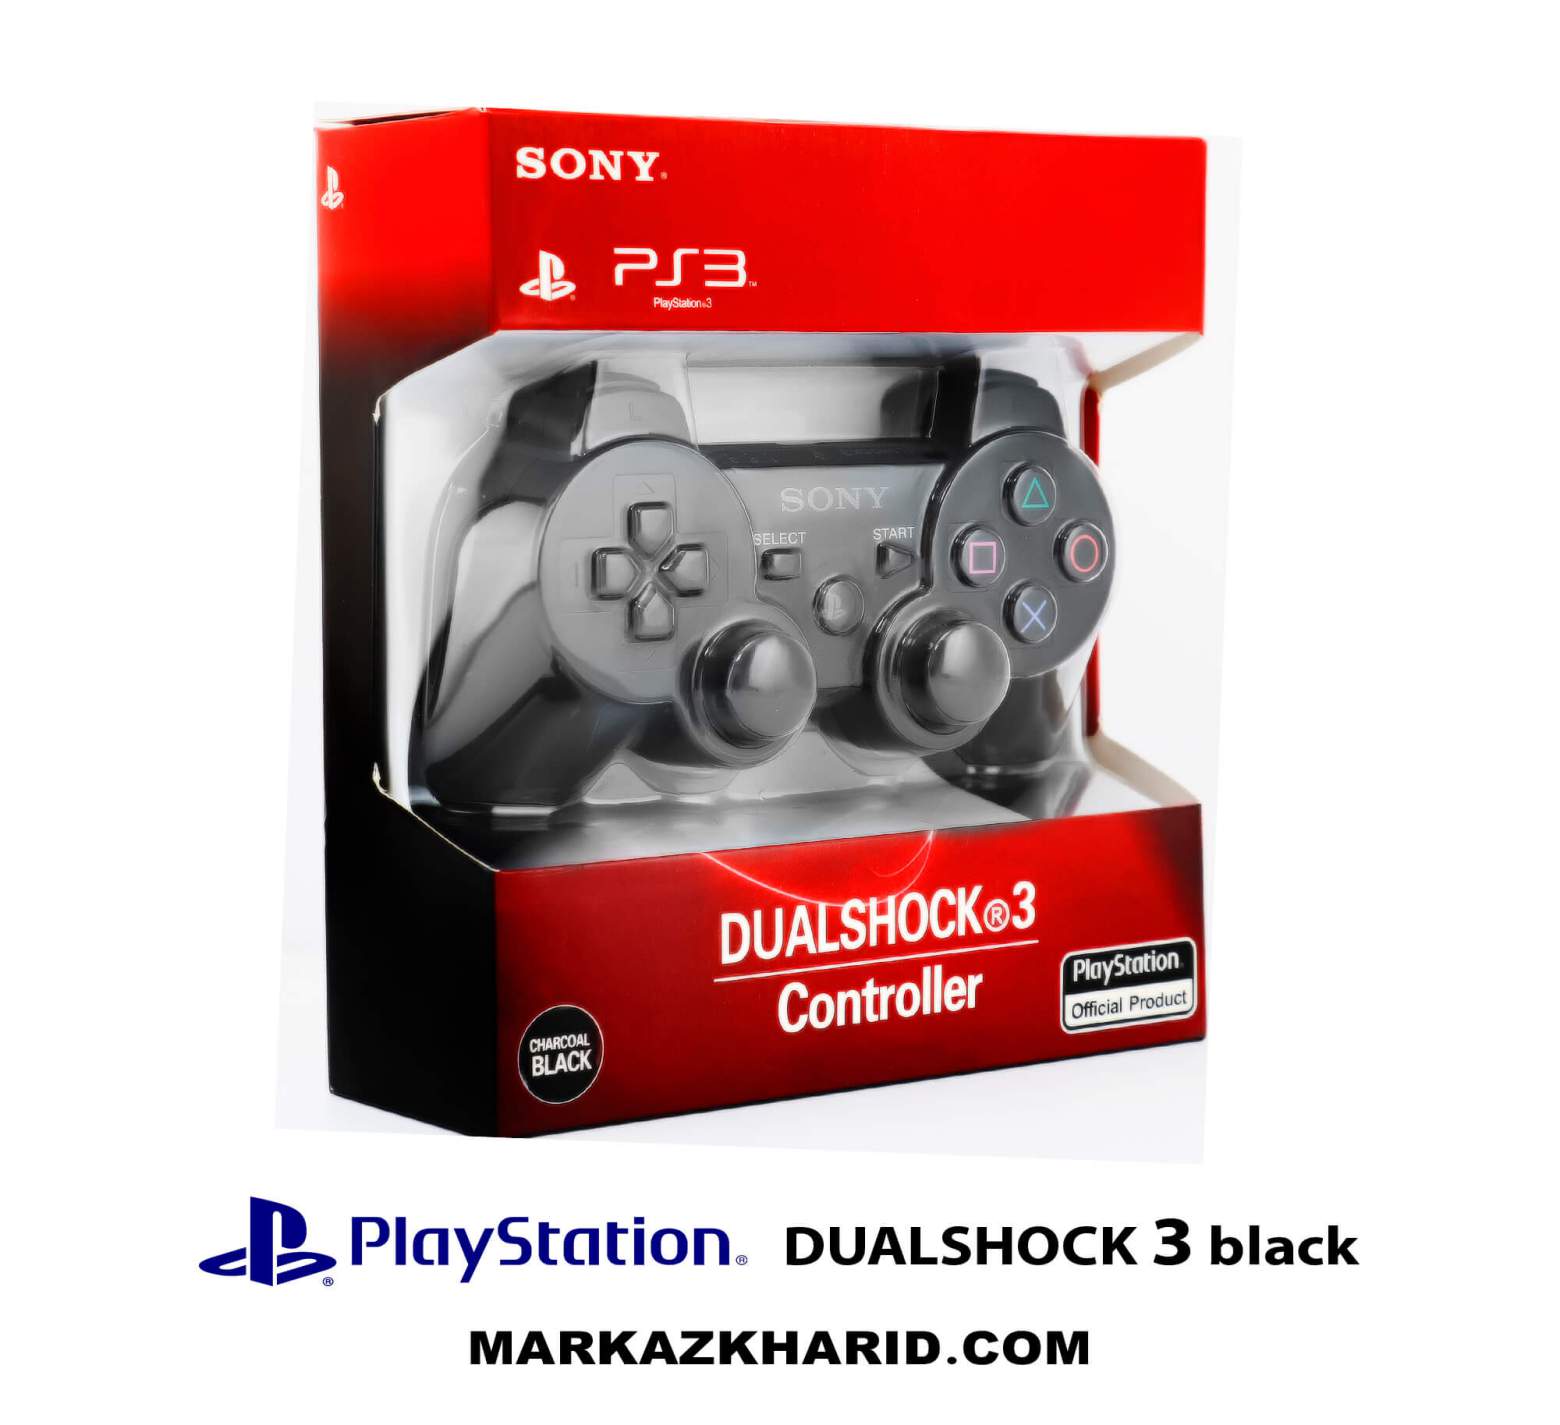 دسته بازی بی سیم پلی استیشن ۳ مشکی Playstation 3 DualShock 3 Wireless Controller Black